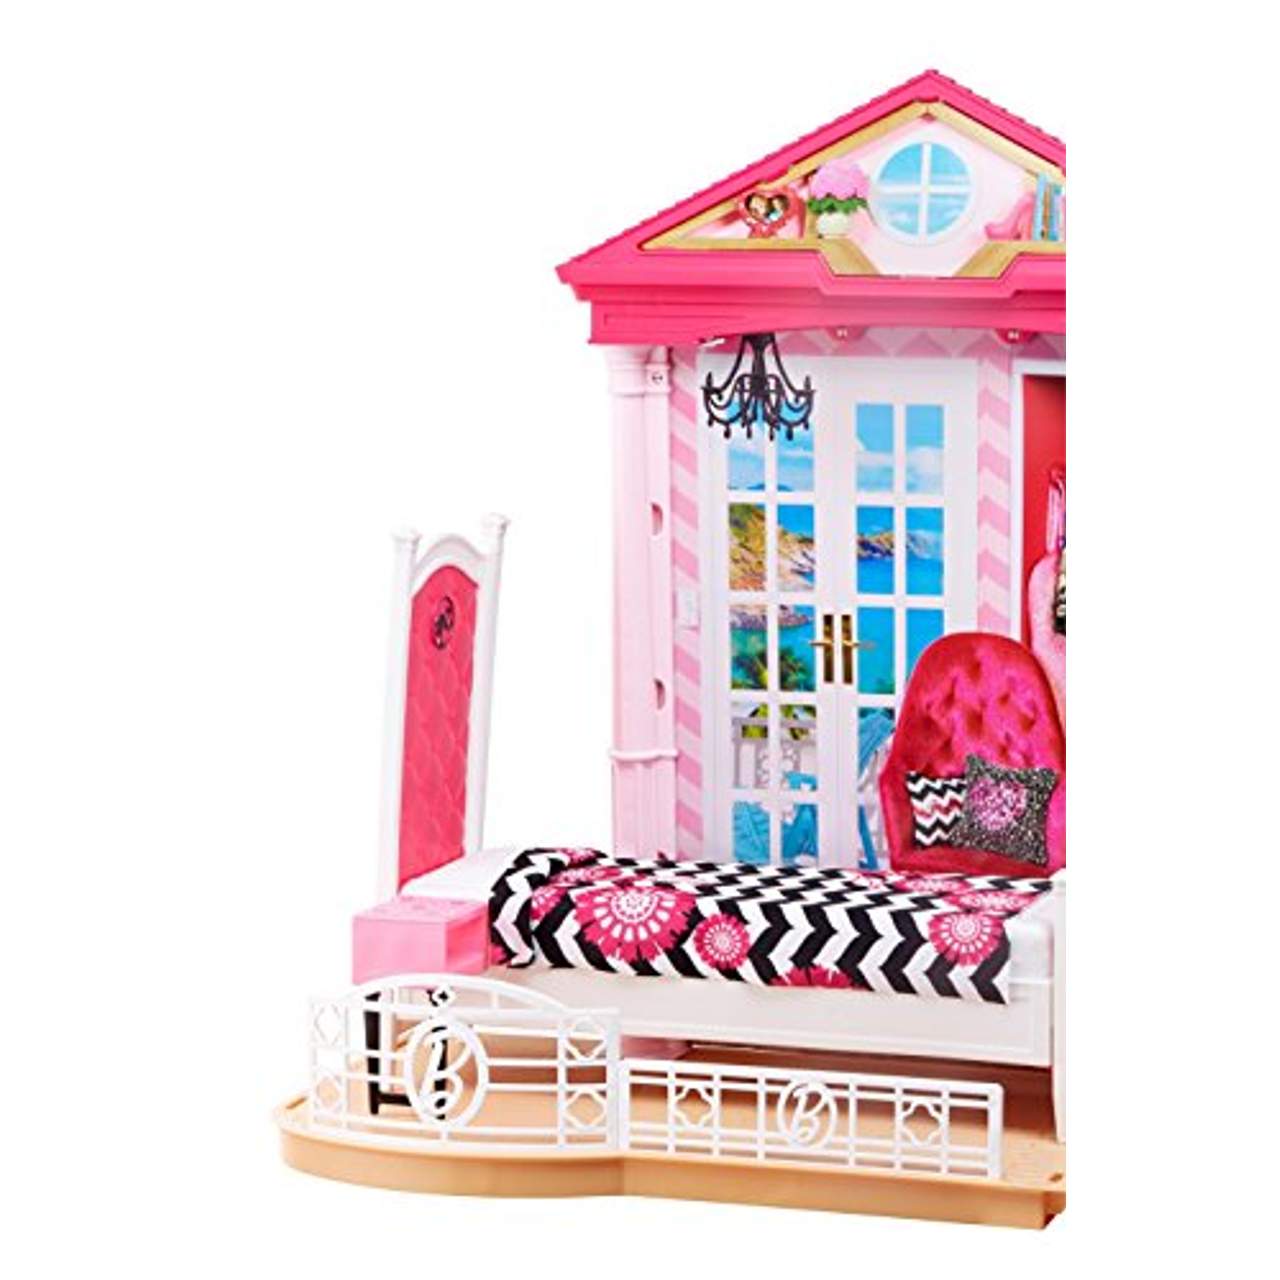 Barbie Complete Home Set